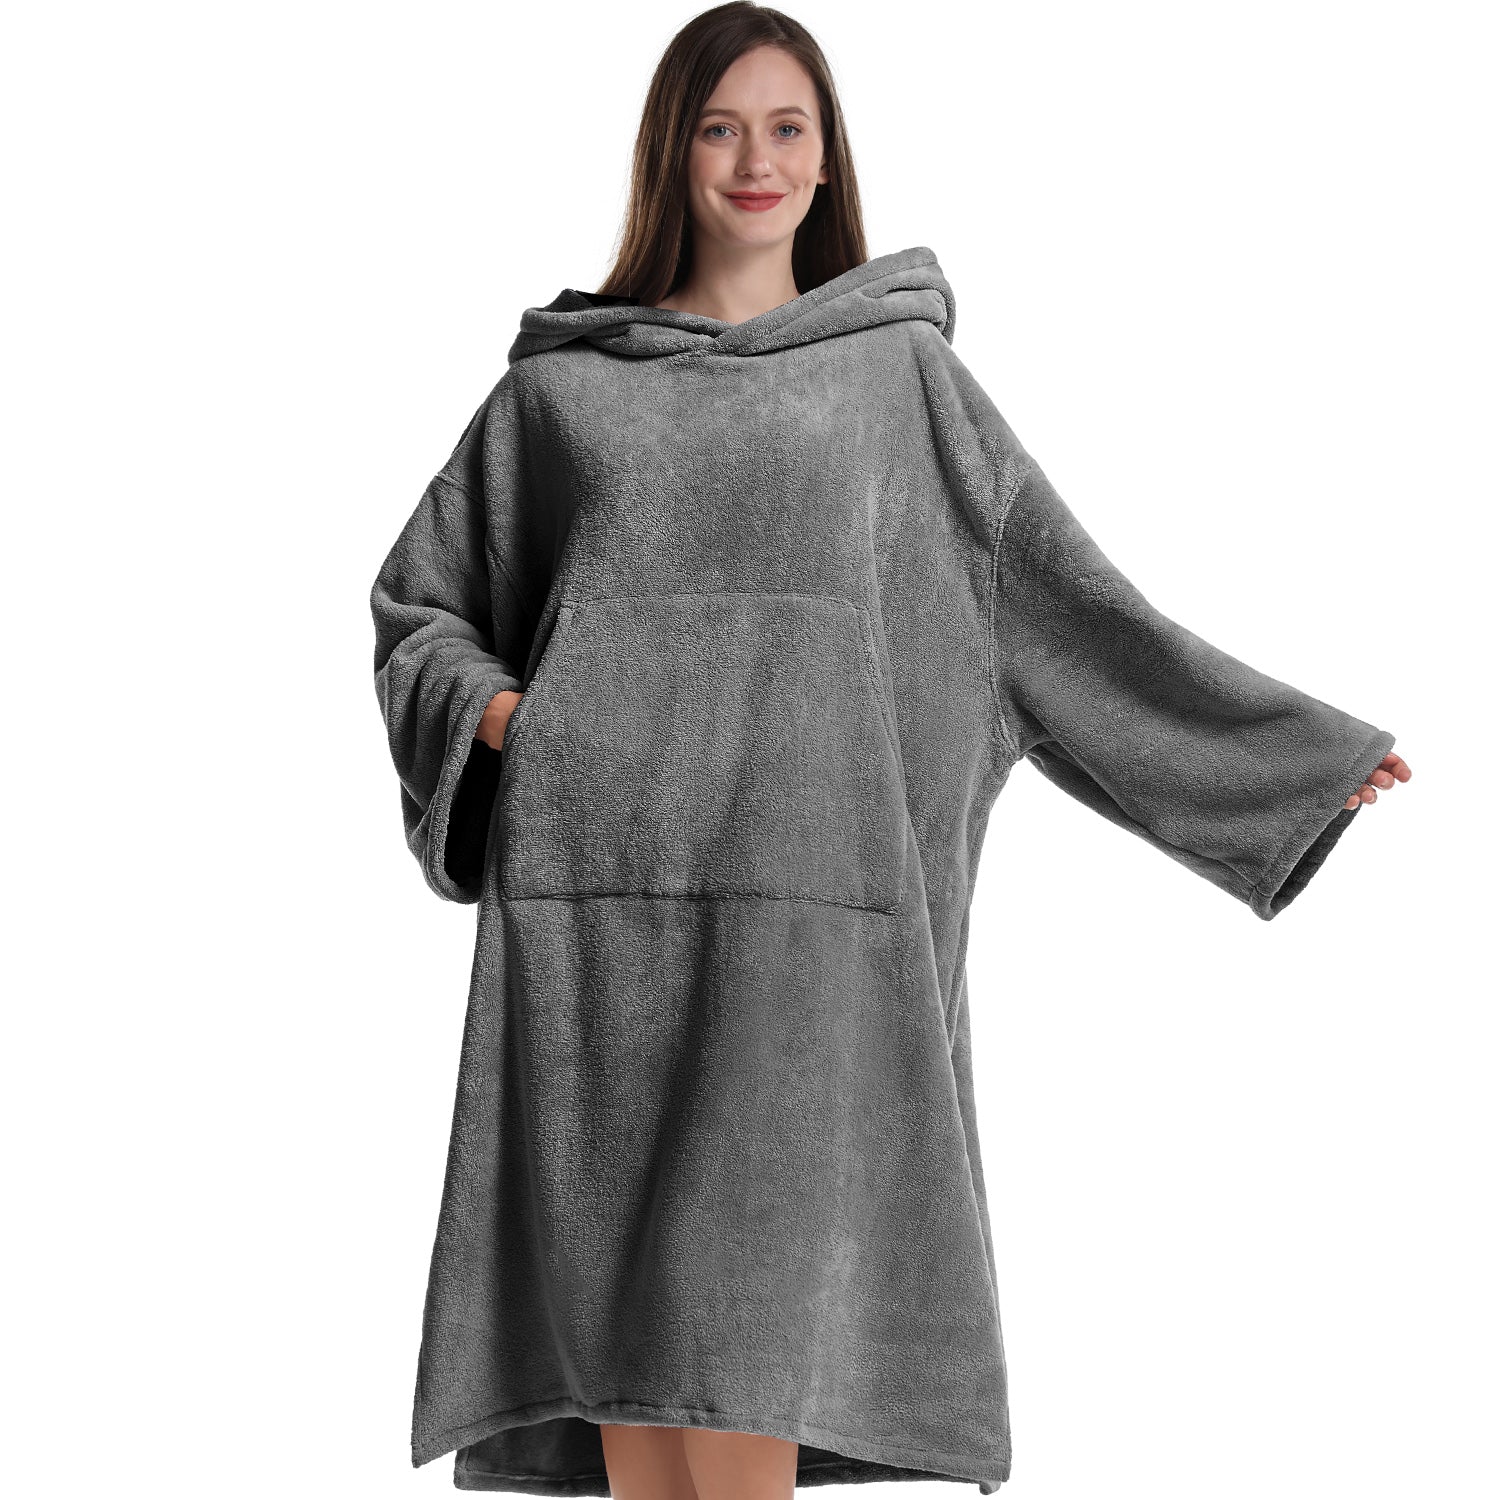 Quick-drying change bathrobe, long sleeve adult bathrobe, soft coral fleece bathrobe